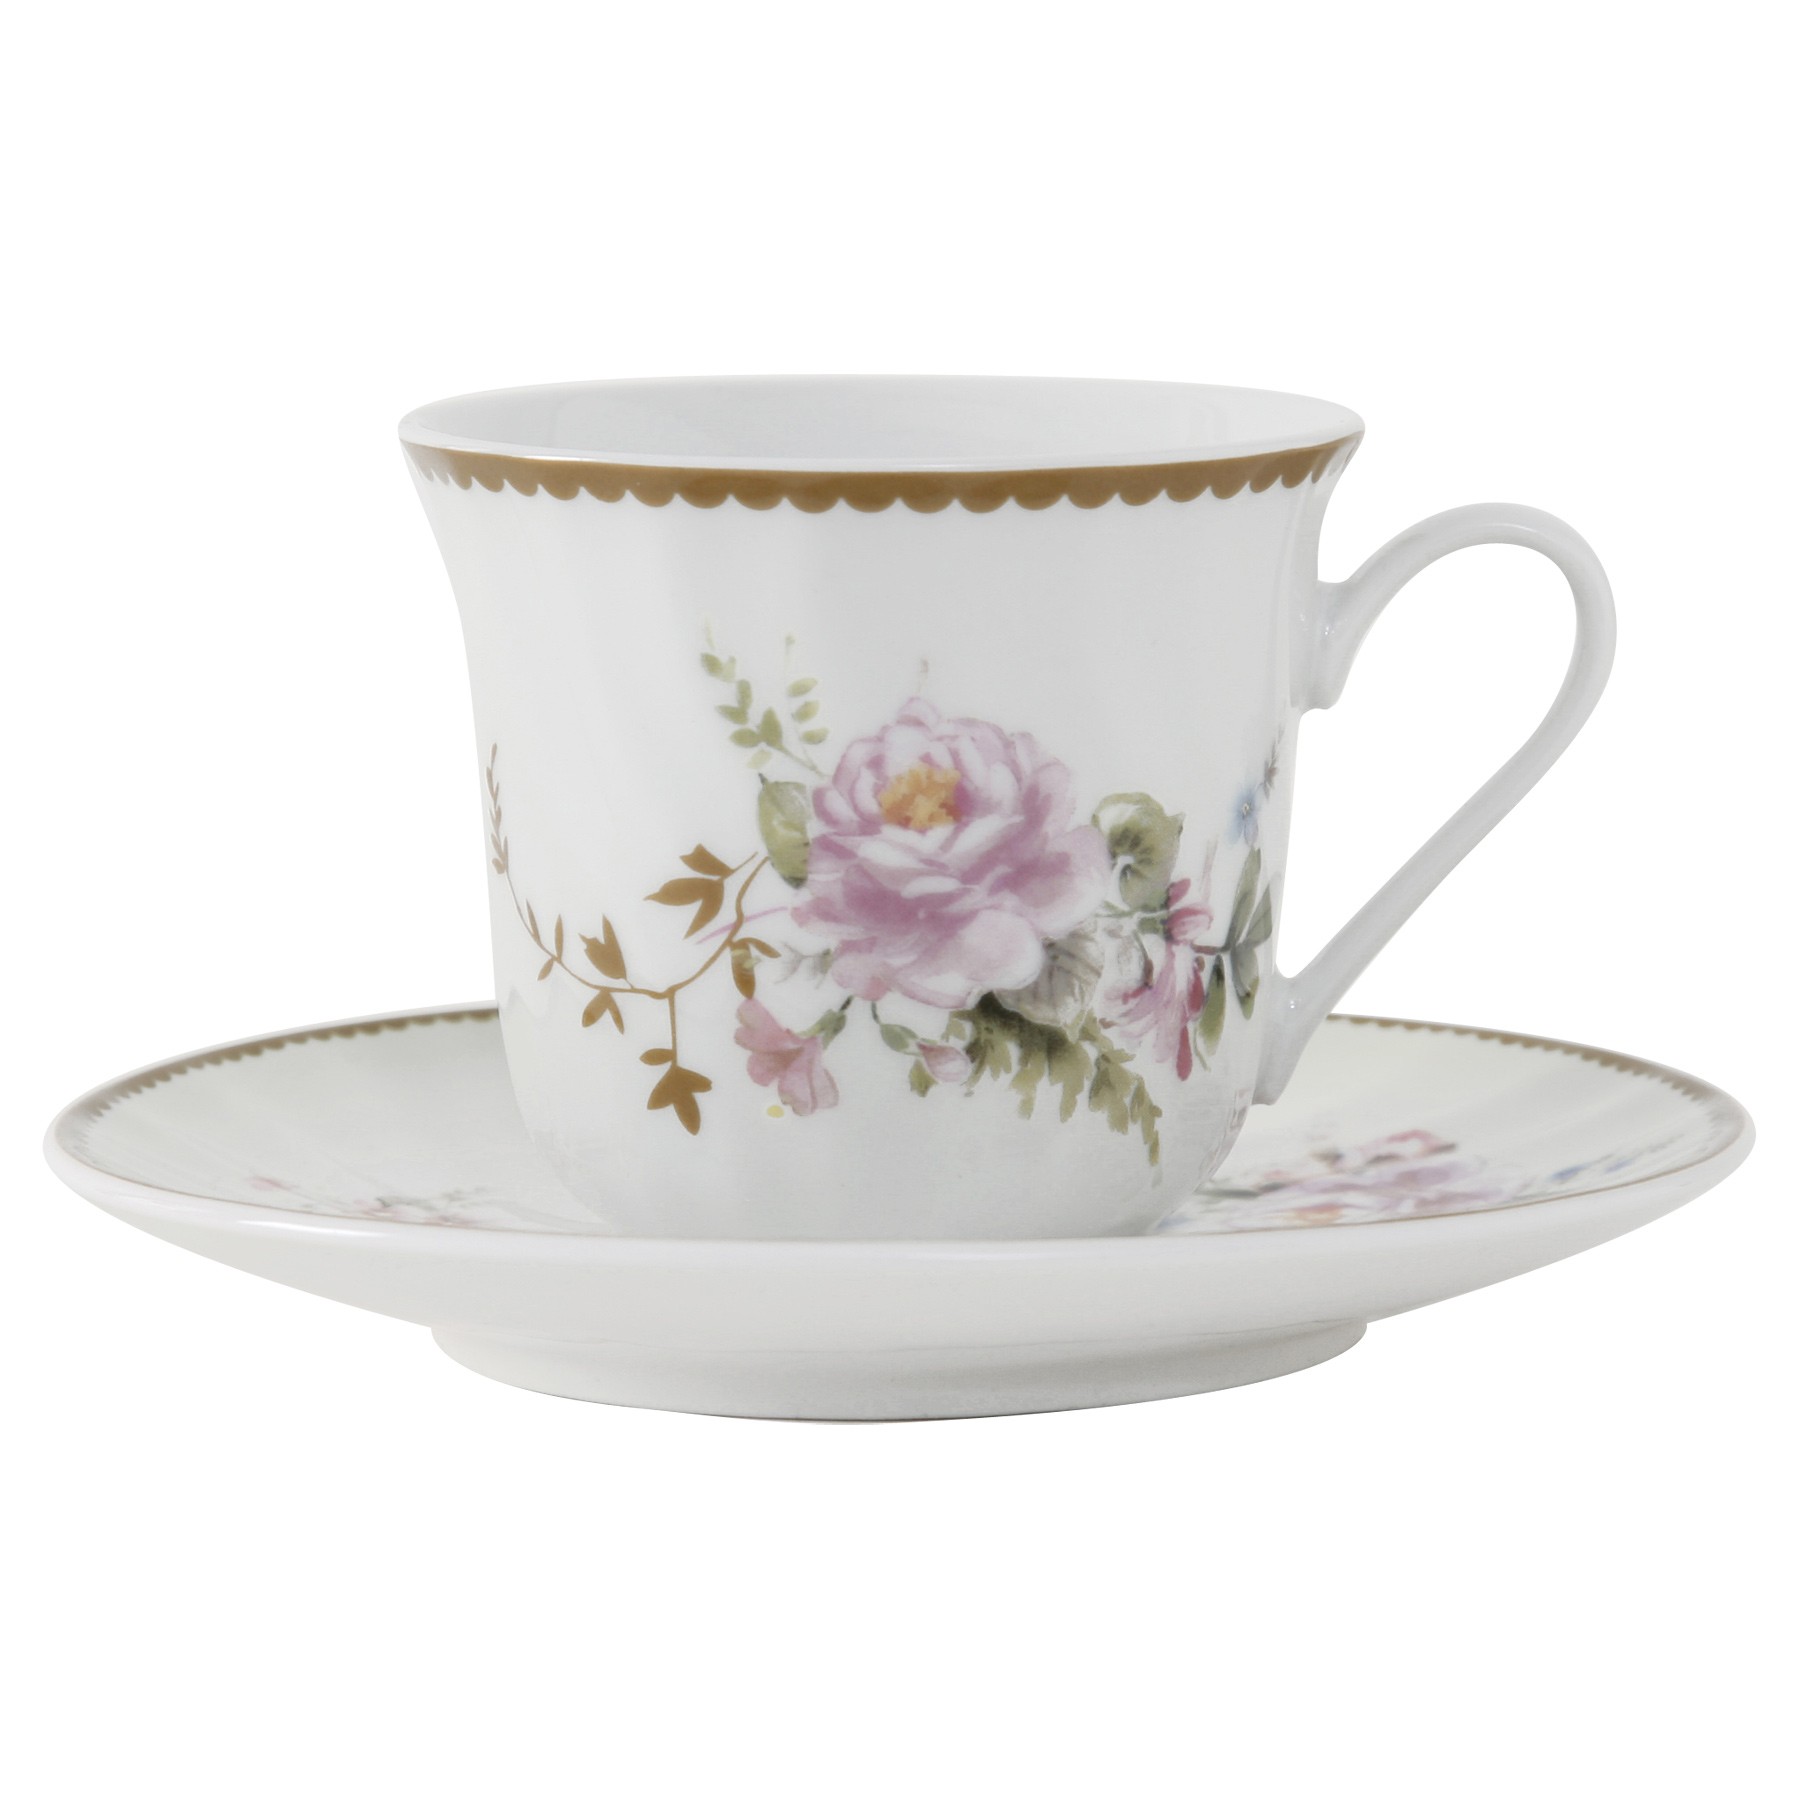 Timeless Rose Porcelain Teacup and Saucer - Set of 6